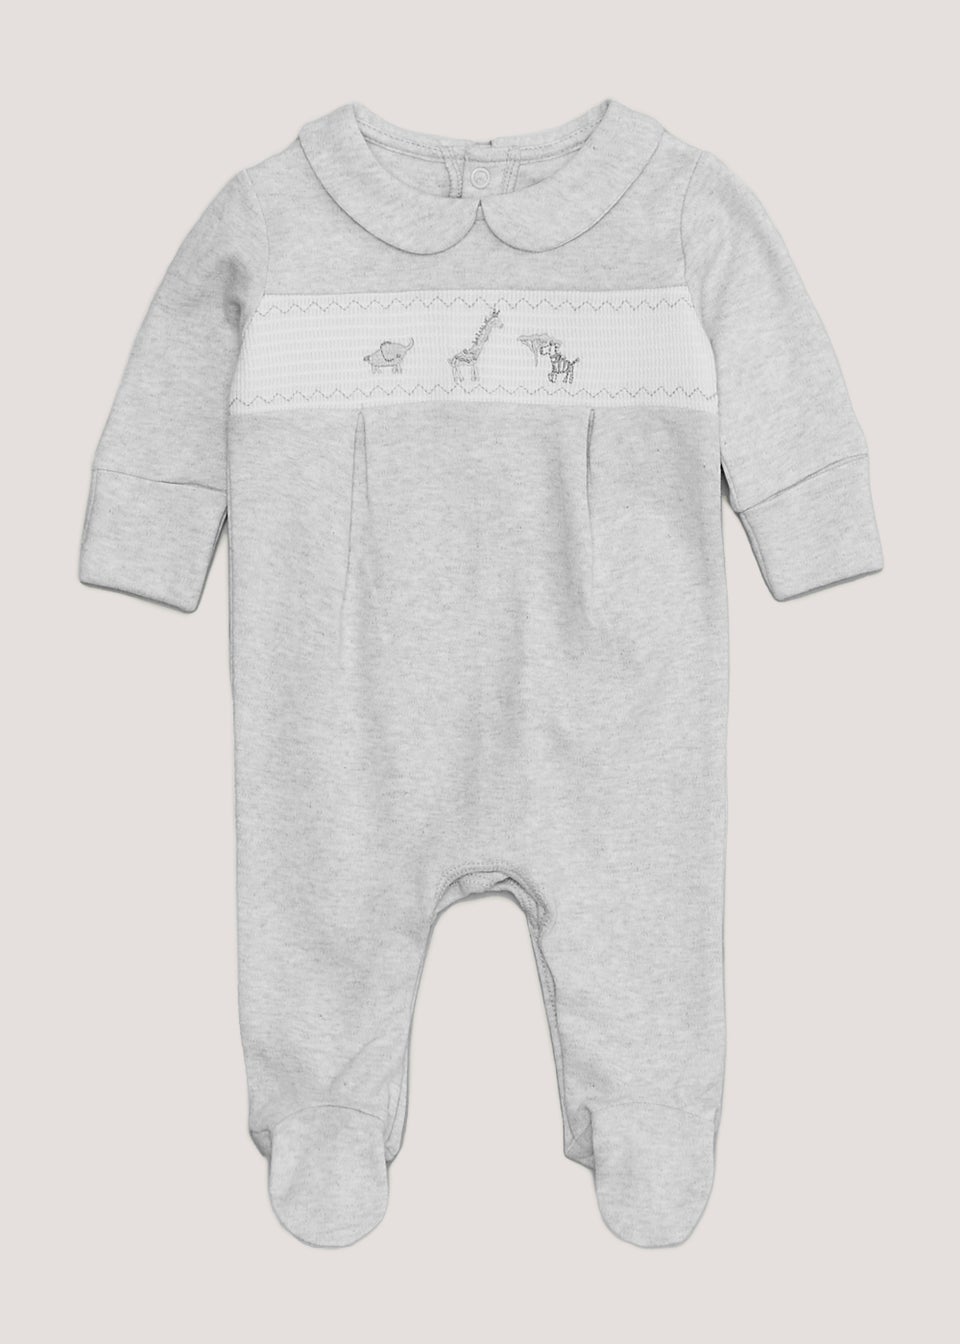 Baby Grey Safari Smocked Sleepsuit (Tiny Baby-12mths)